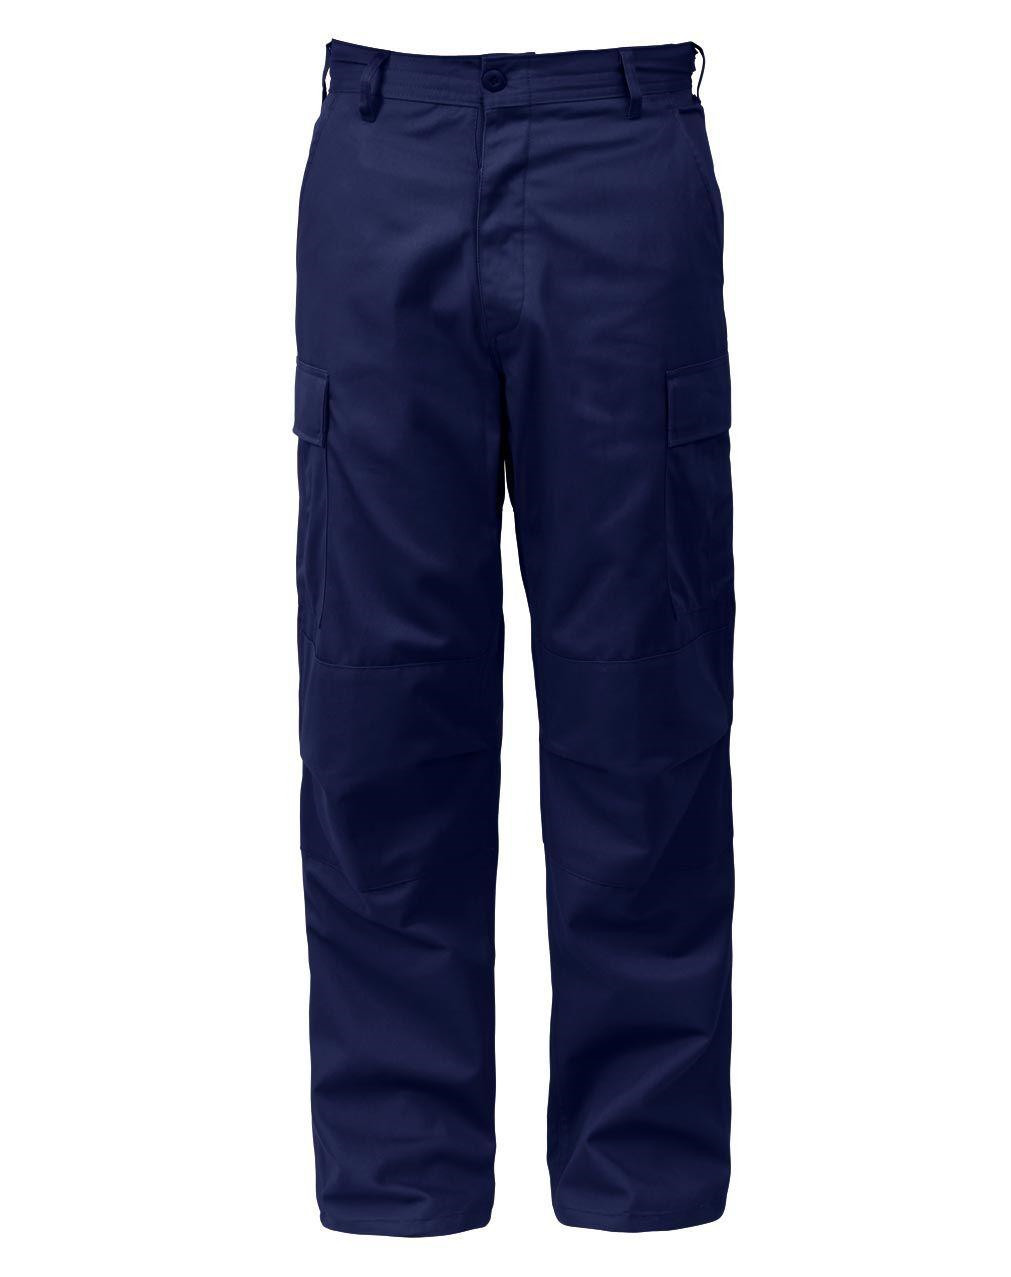 6: Rothco Uniform Bukser (Navy, XL)